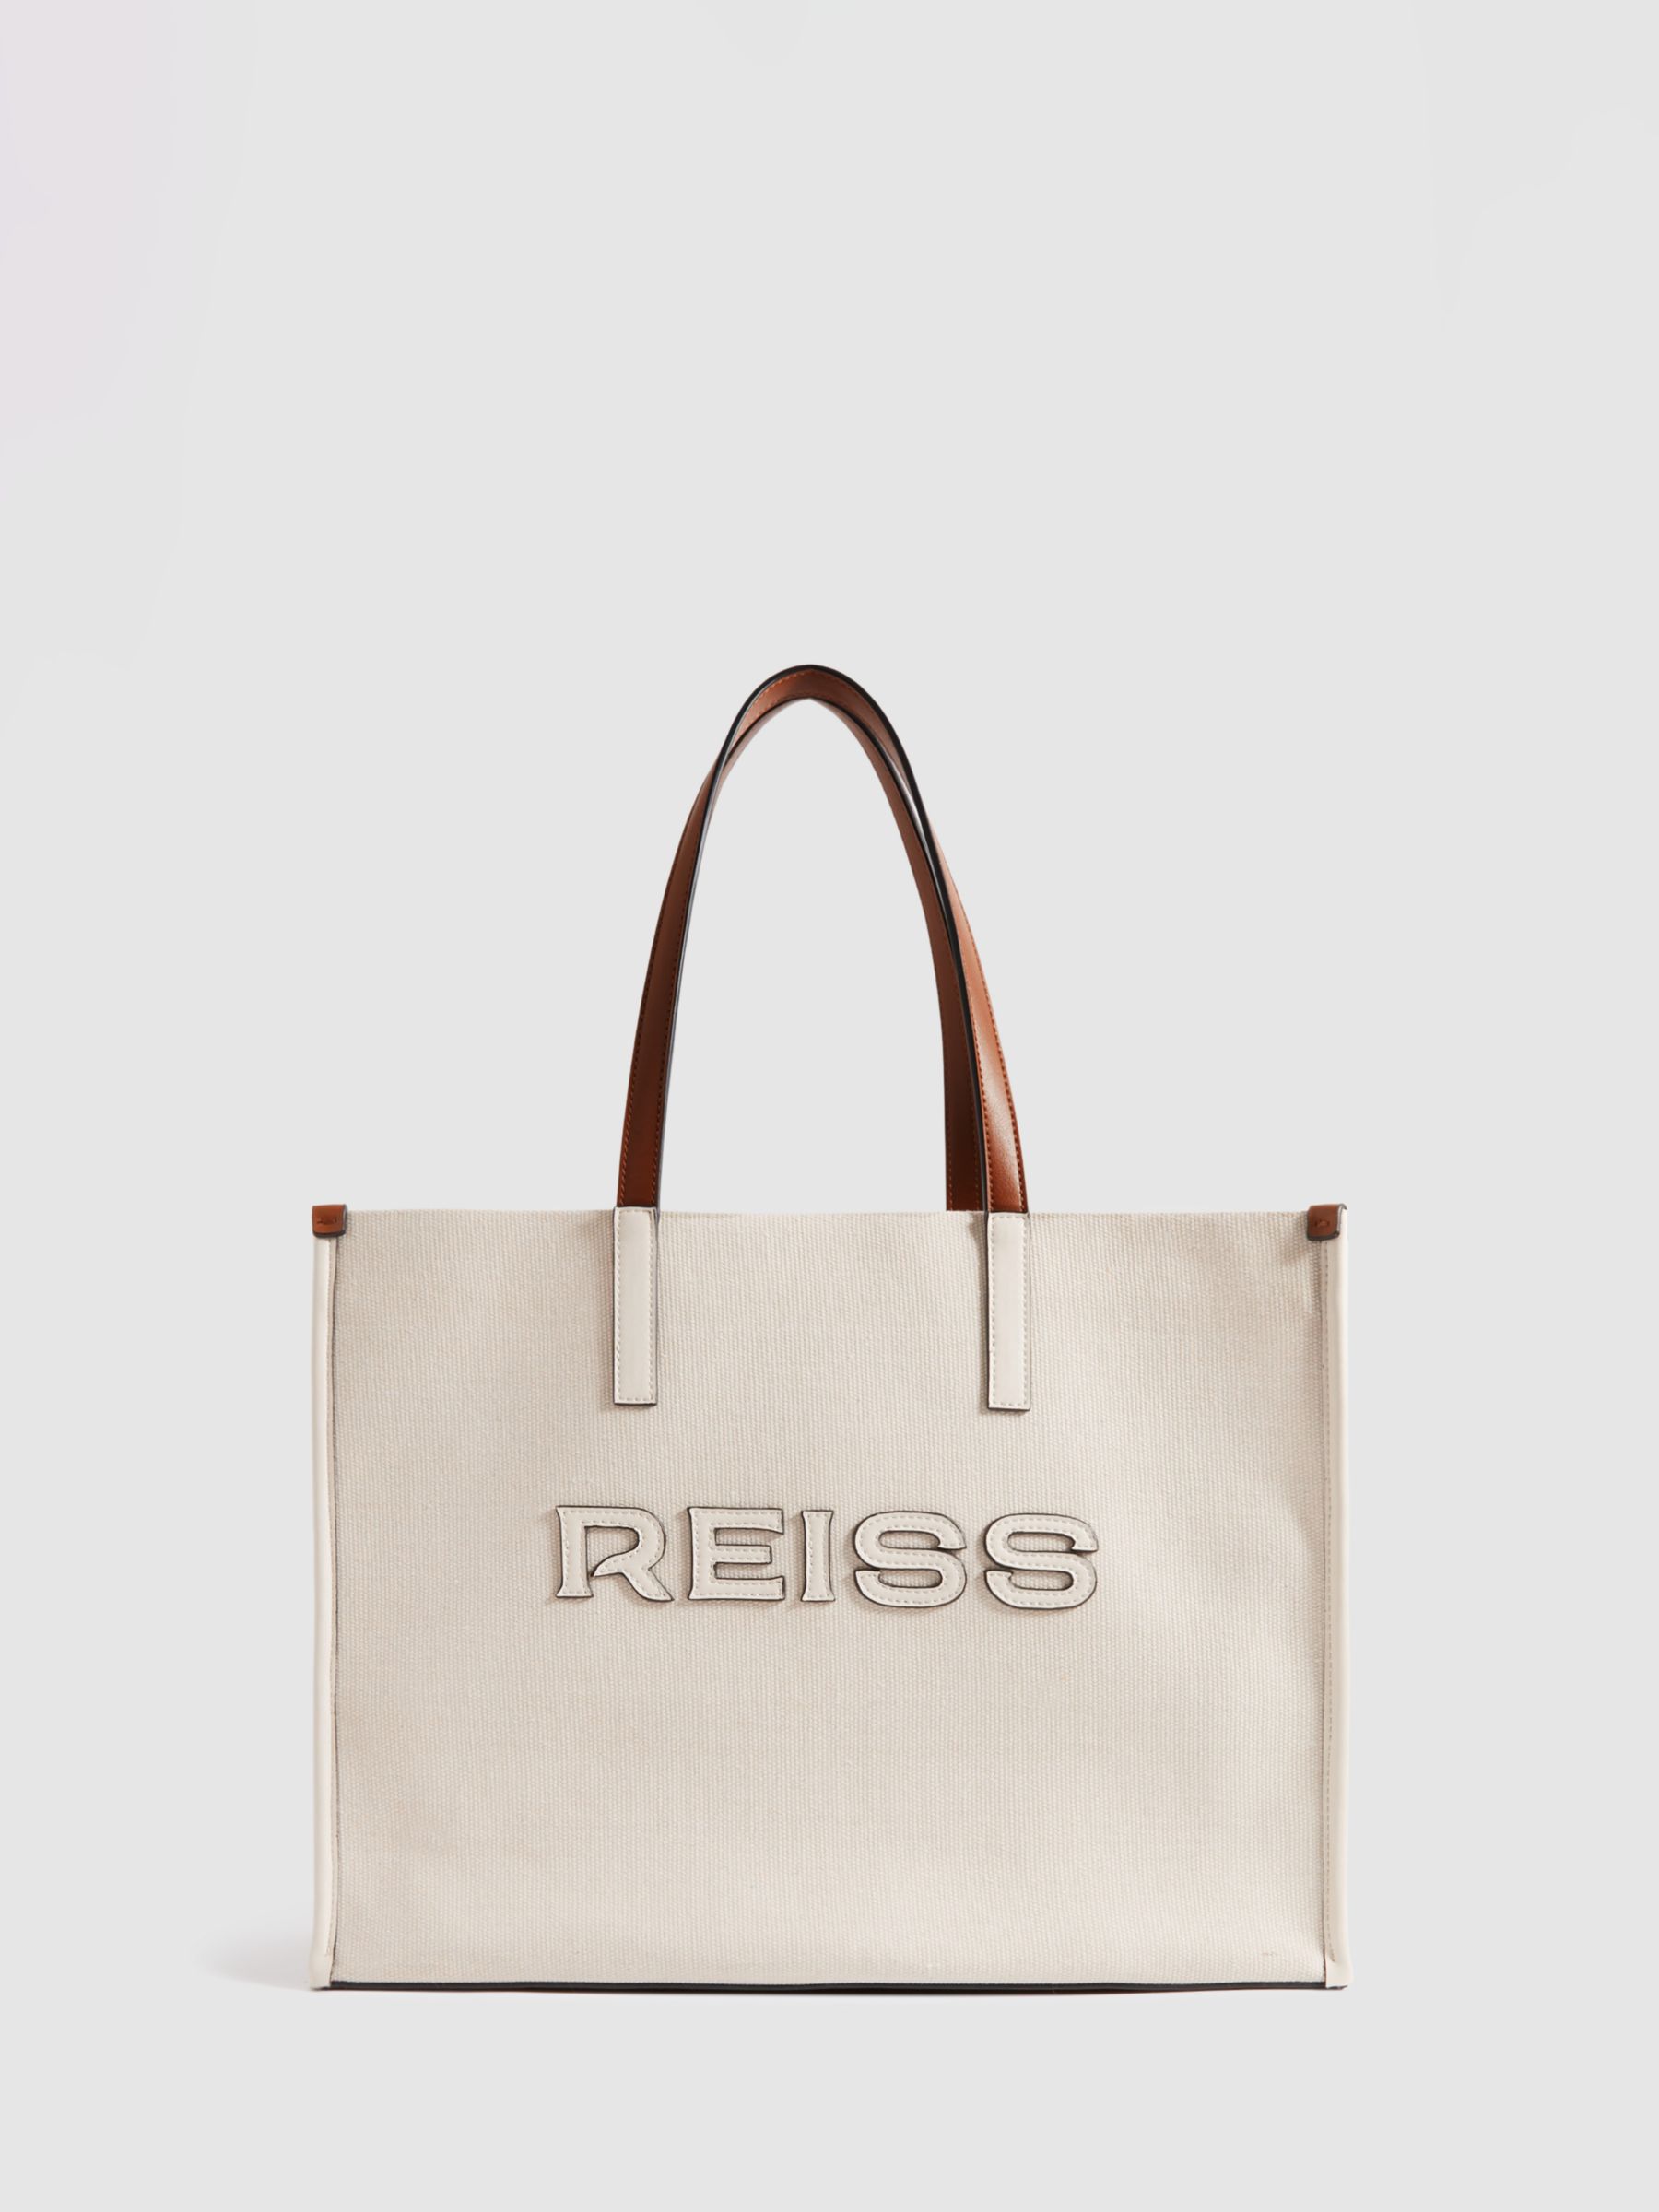 Reiss Lola Woven Logo Tote Bag, Natural/Tan, One Size